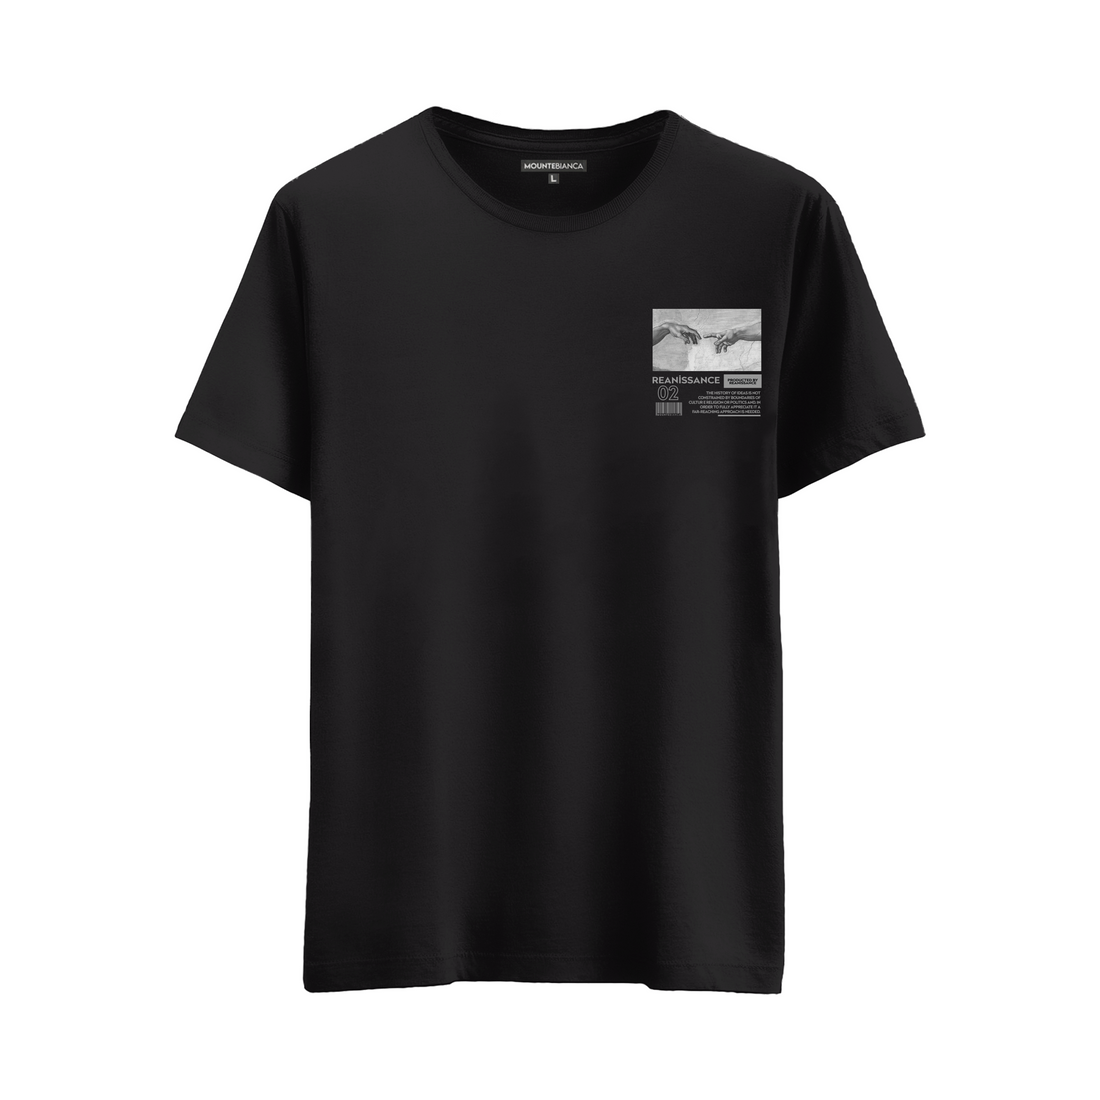 Reanissance - Regular Fit T-Shirt